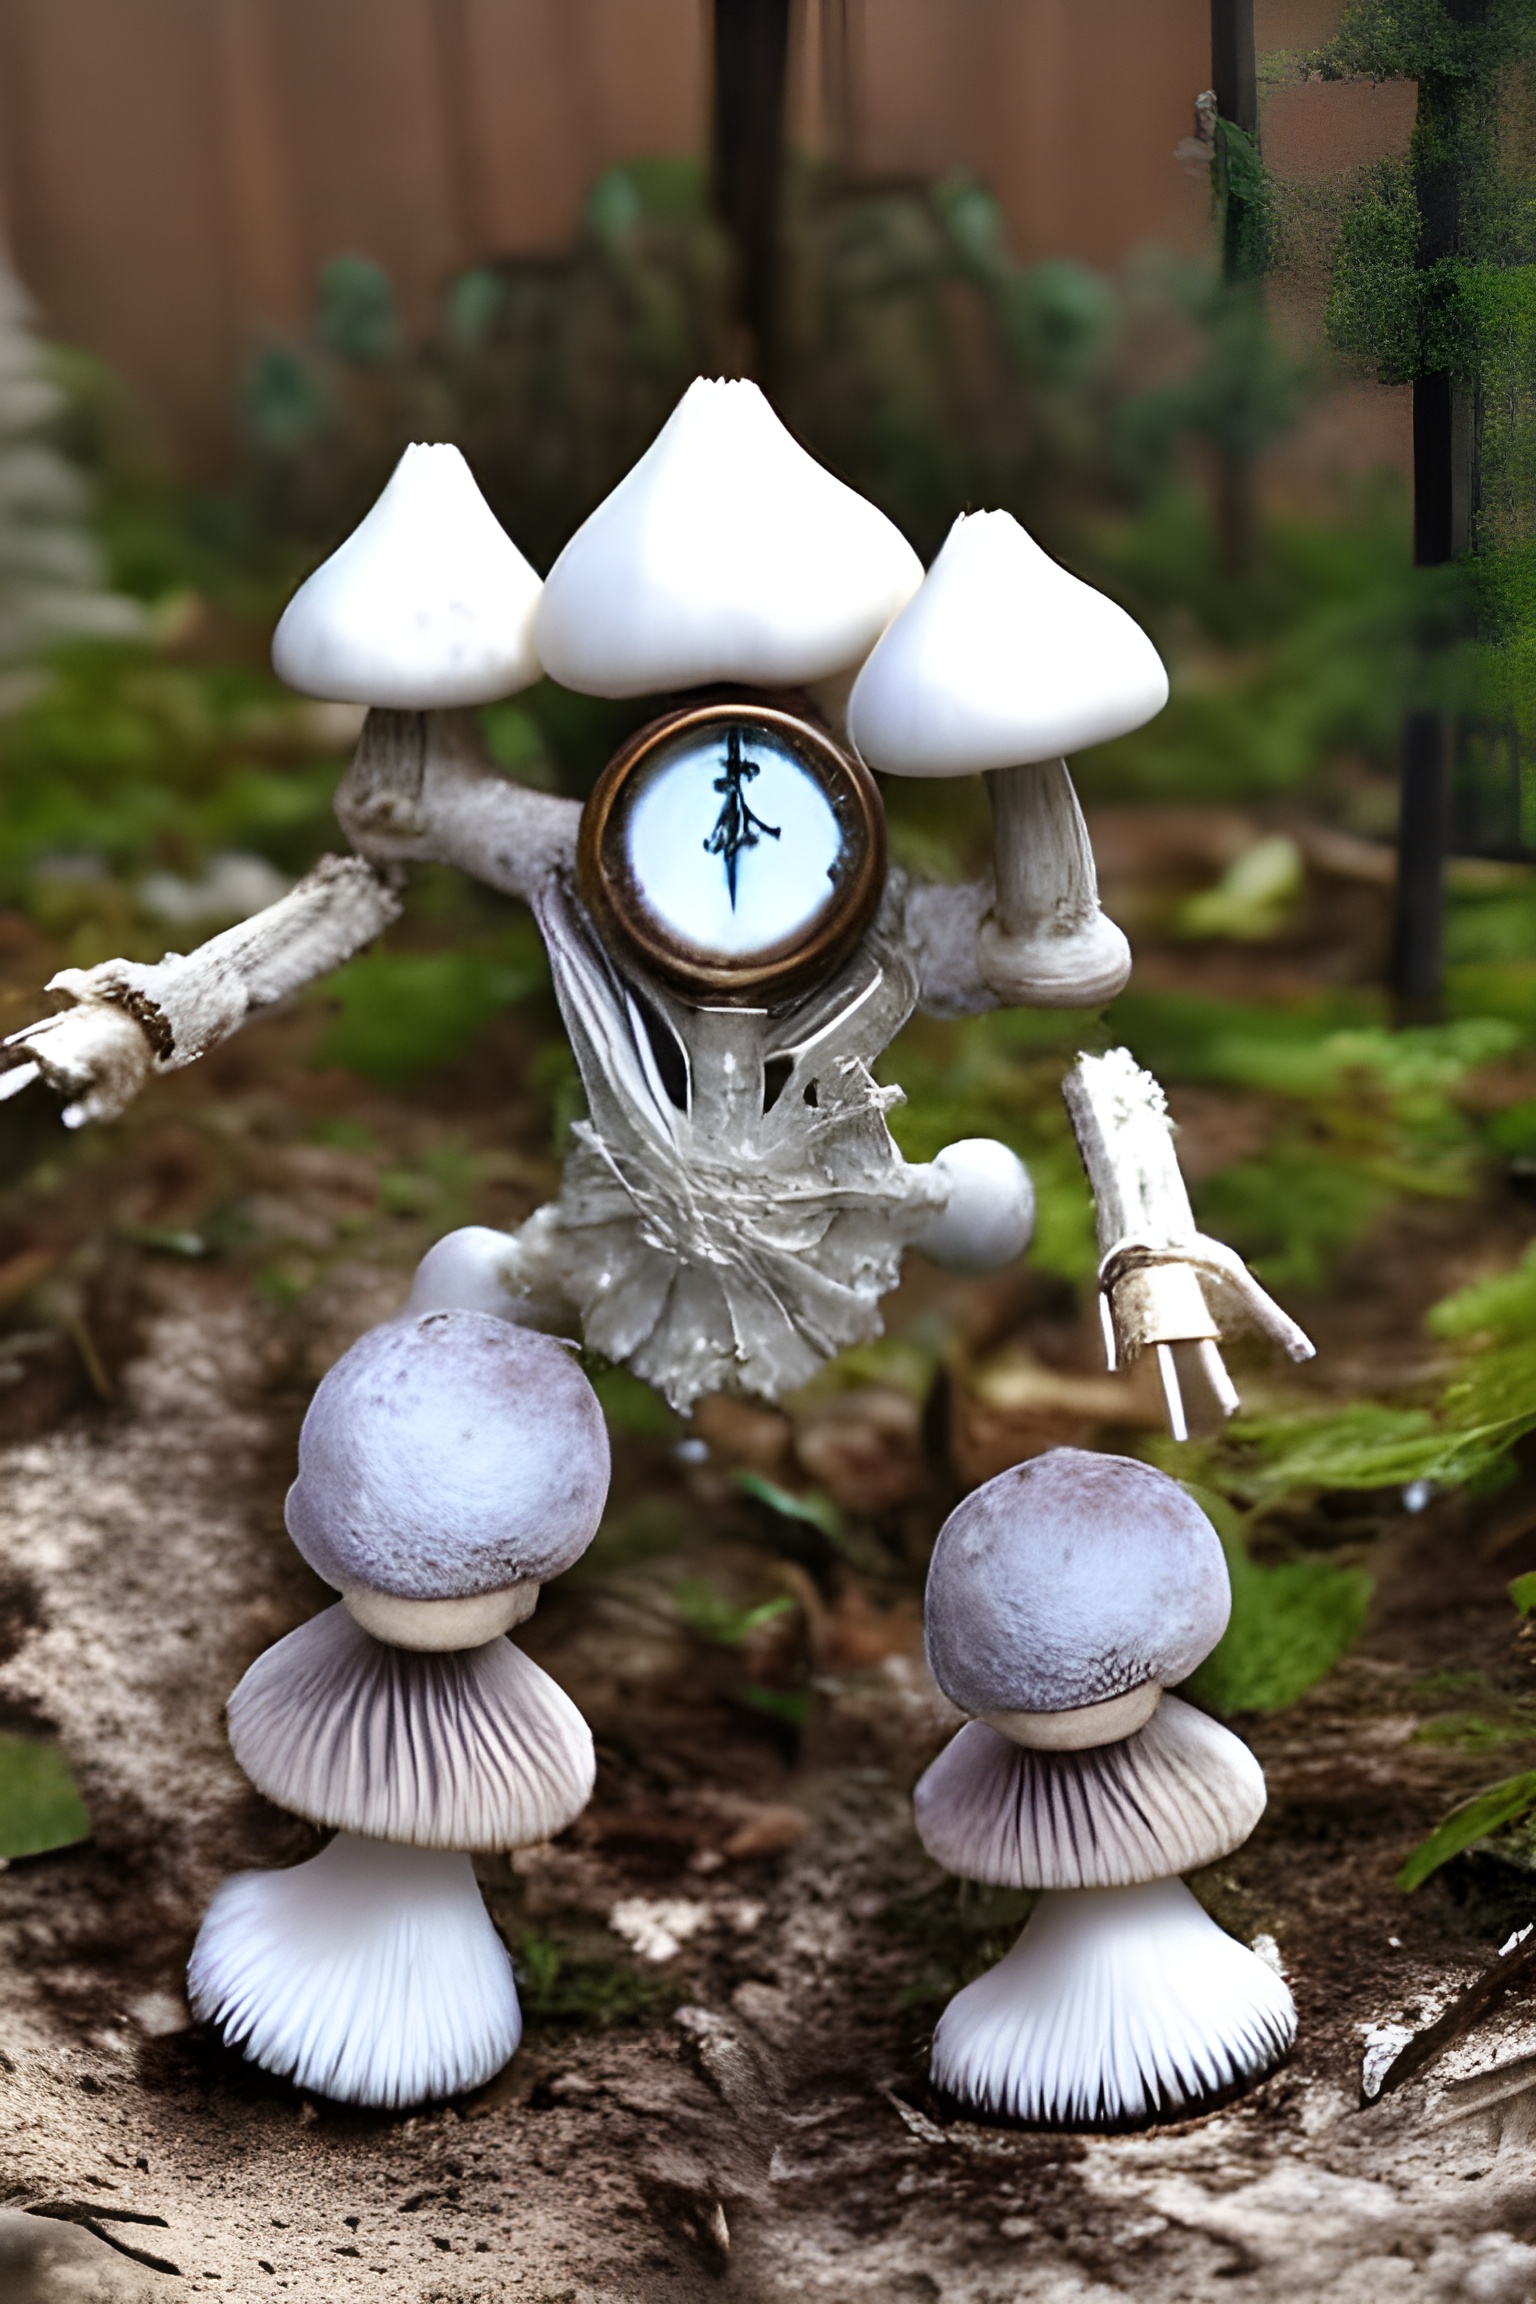 Jack Frost Cubensis Mushroom